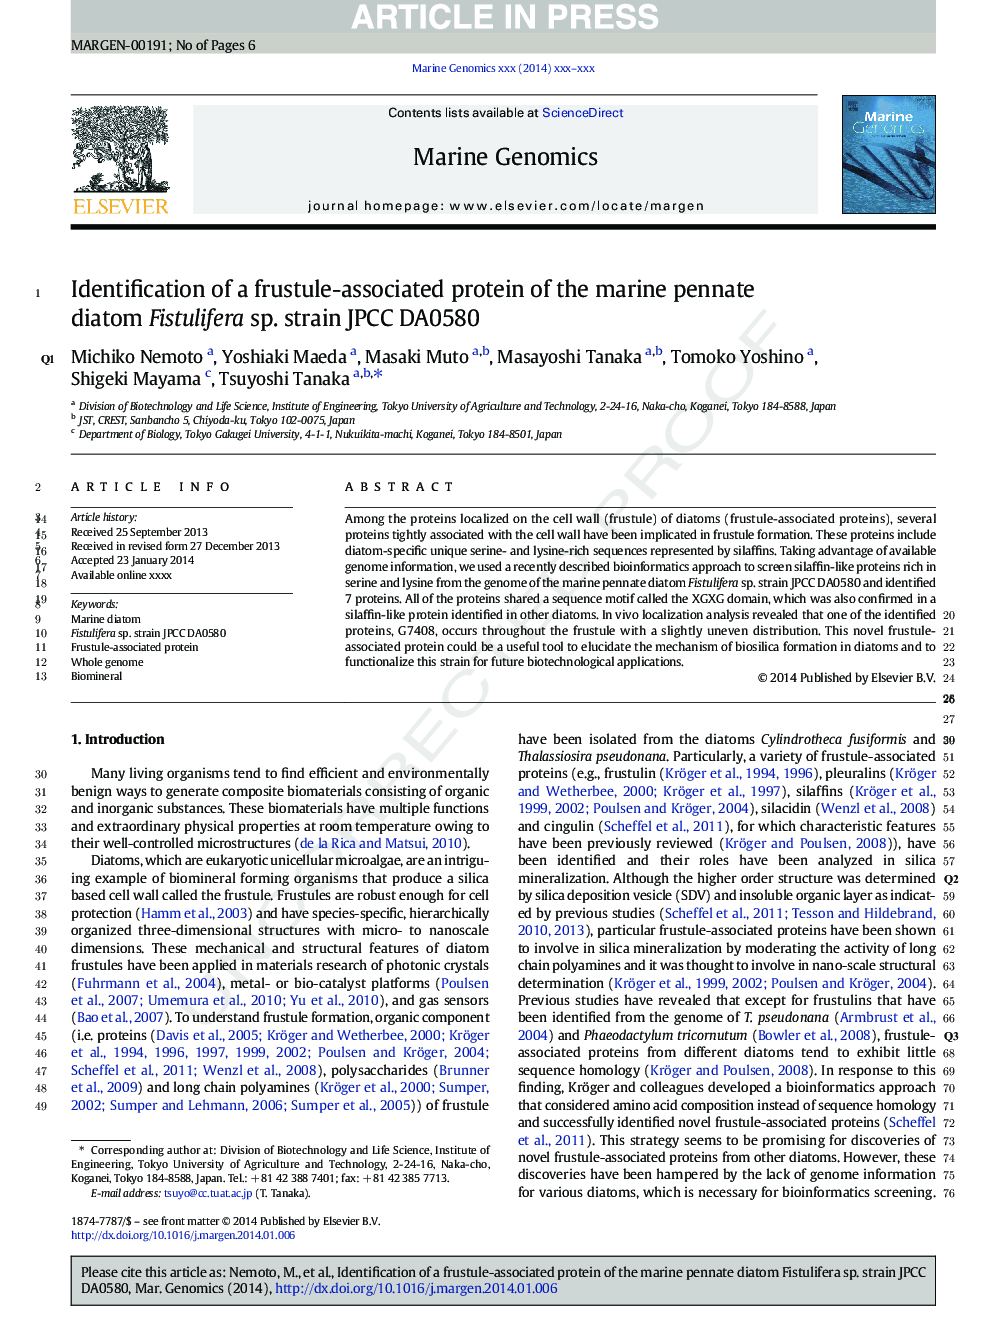 Identification of a frustule-associated protein of the marine pennate diatom Fistulifera sp. strain JPCC DA0580